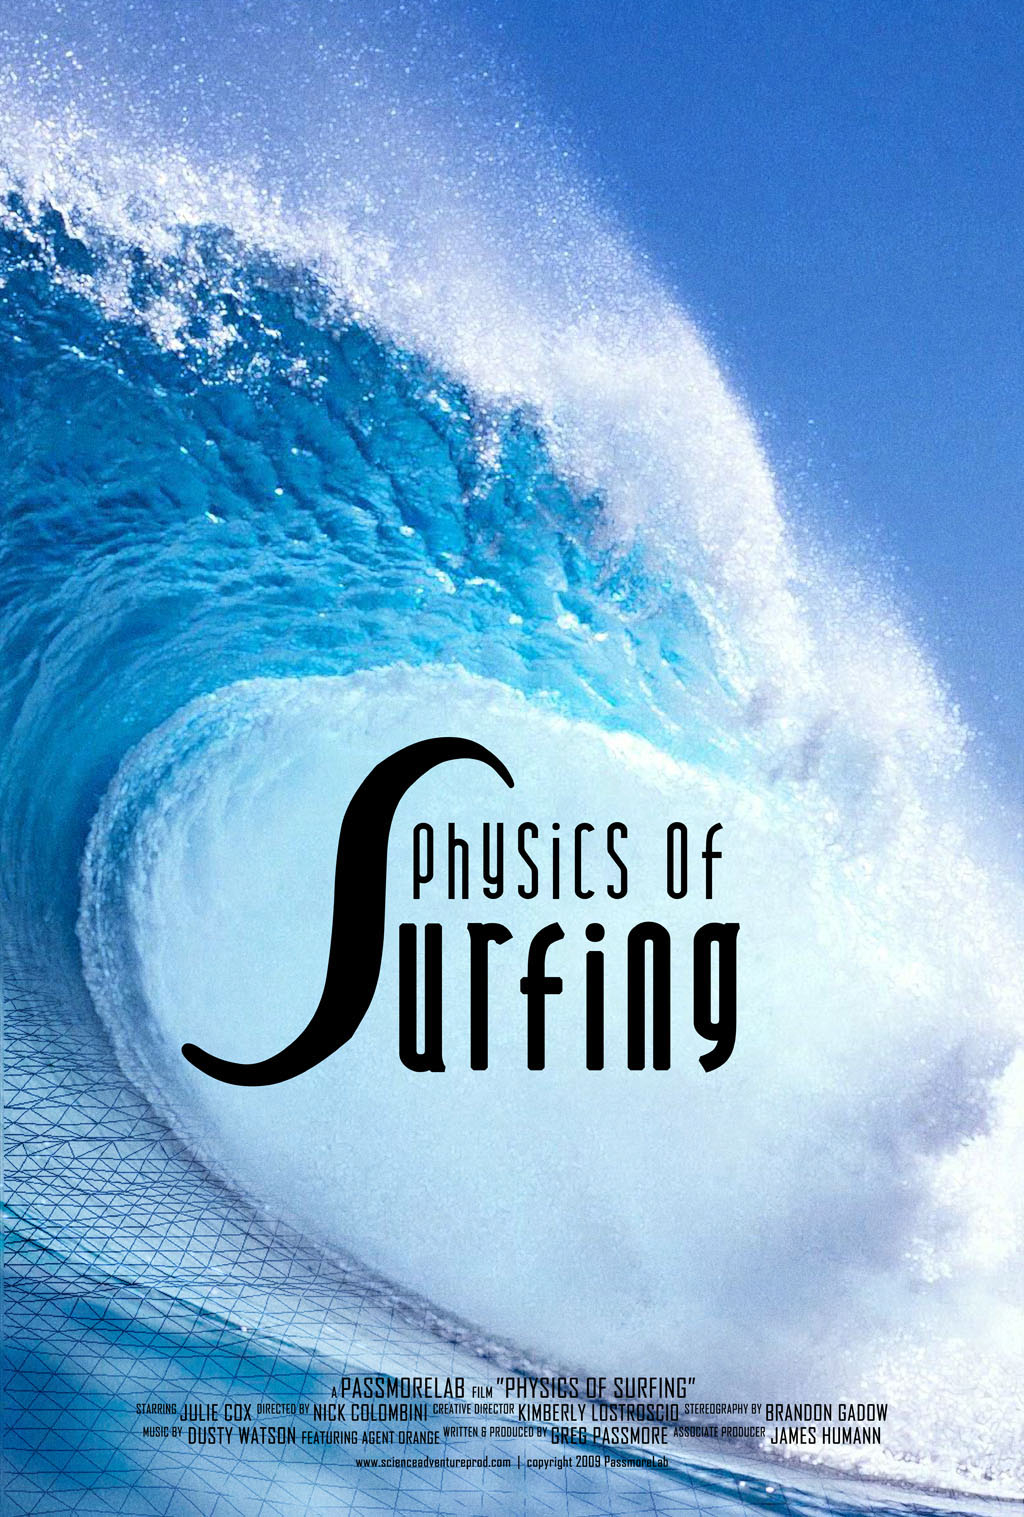 physicsofsurfing_poster-2.jpg